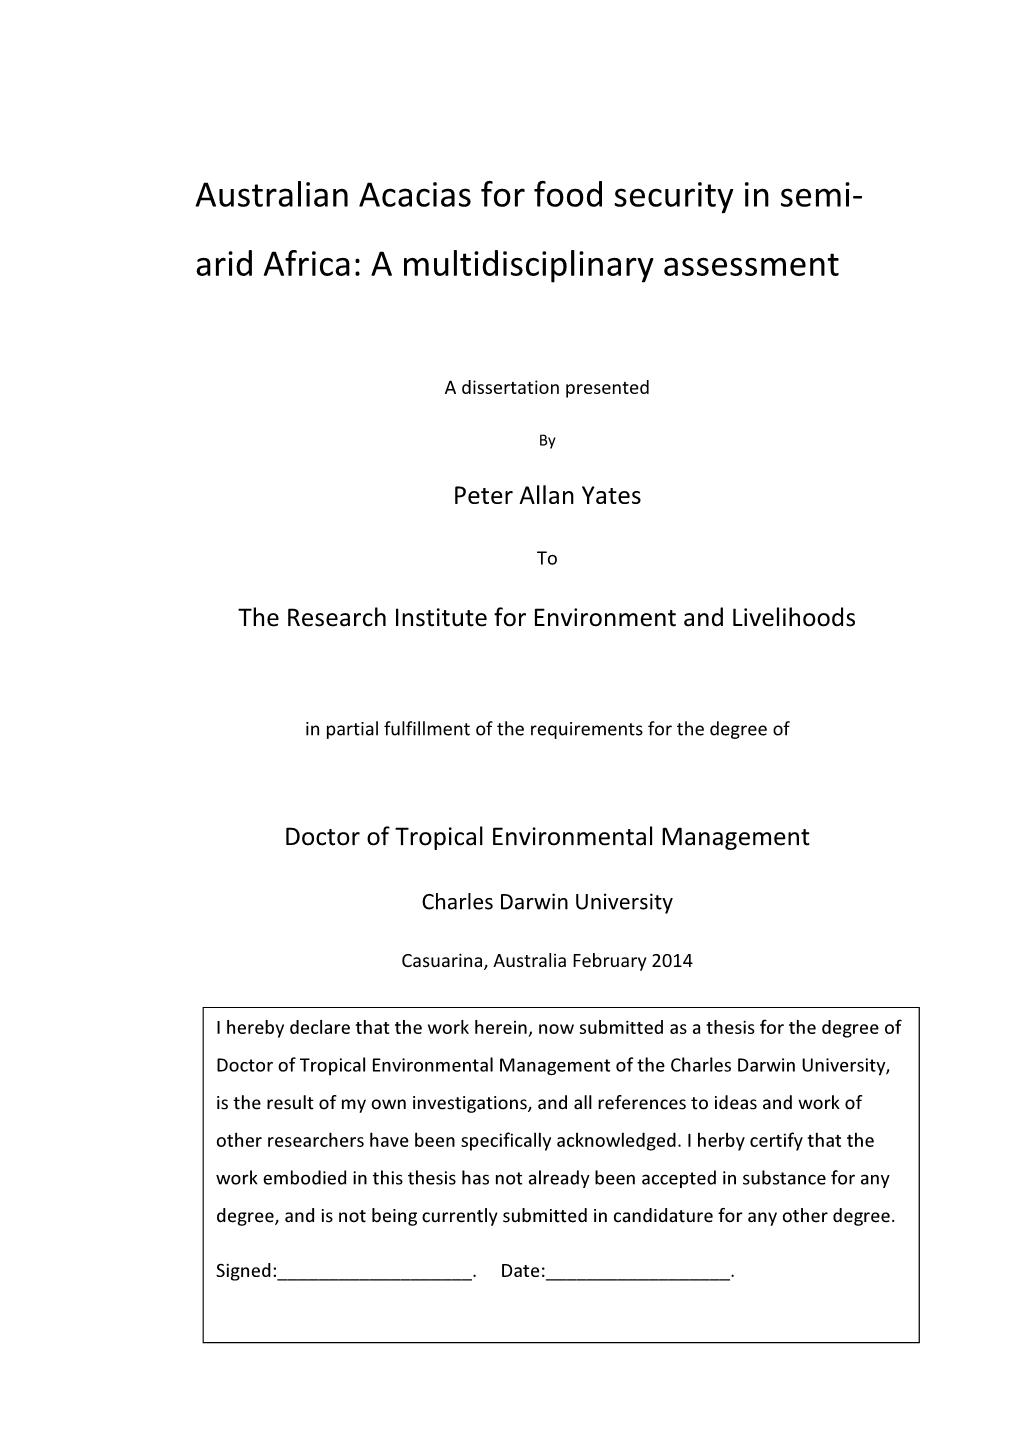 Australian Acacias for Food Security in Semi- Arid Africa: a Multidisciplinary Assessment